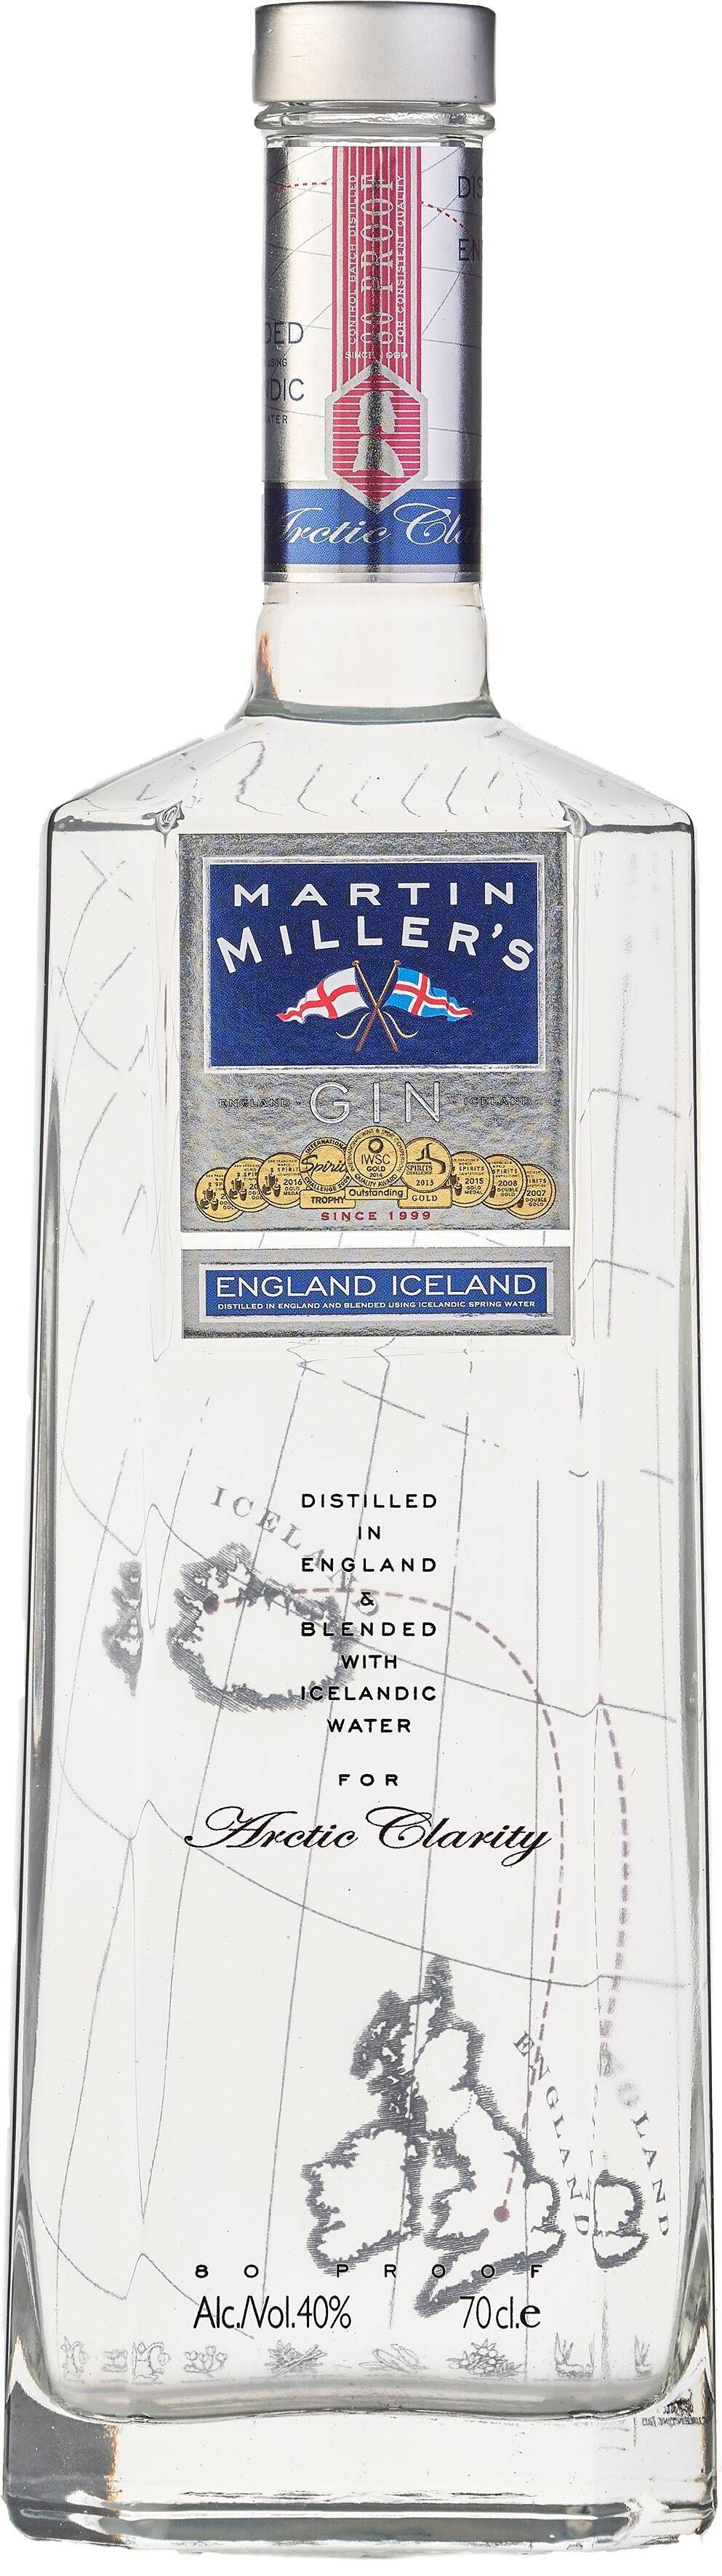 Martin Millers Original Gin 700mL Bottle